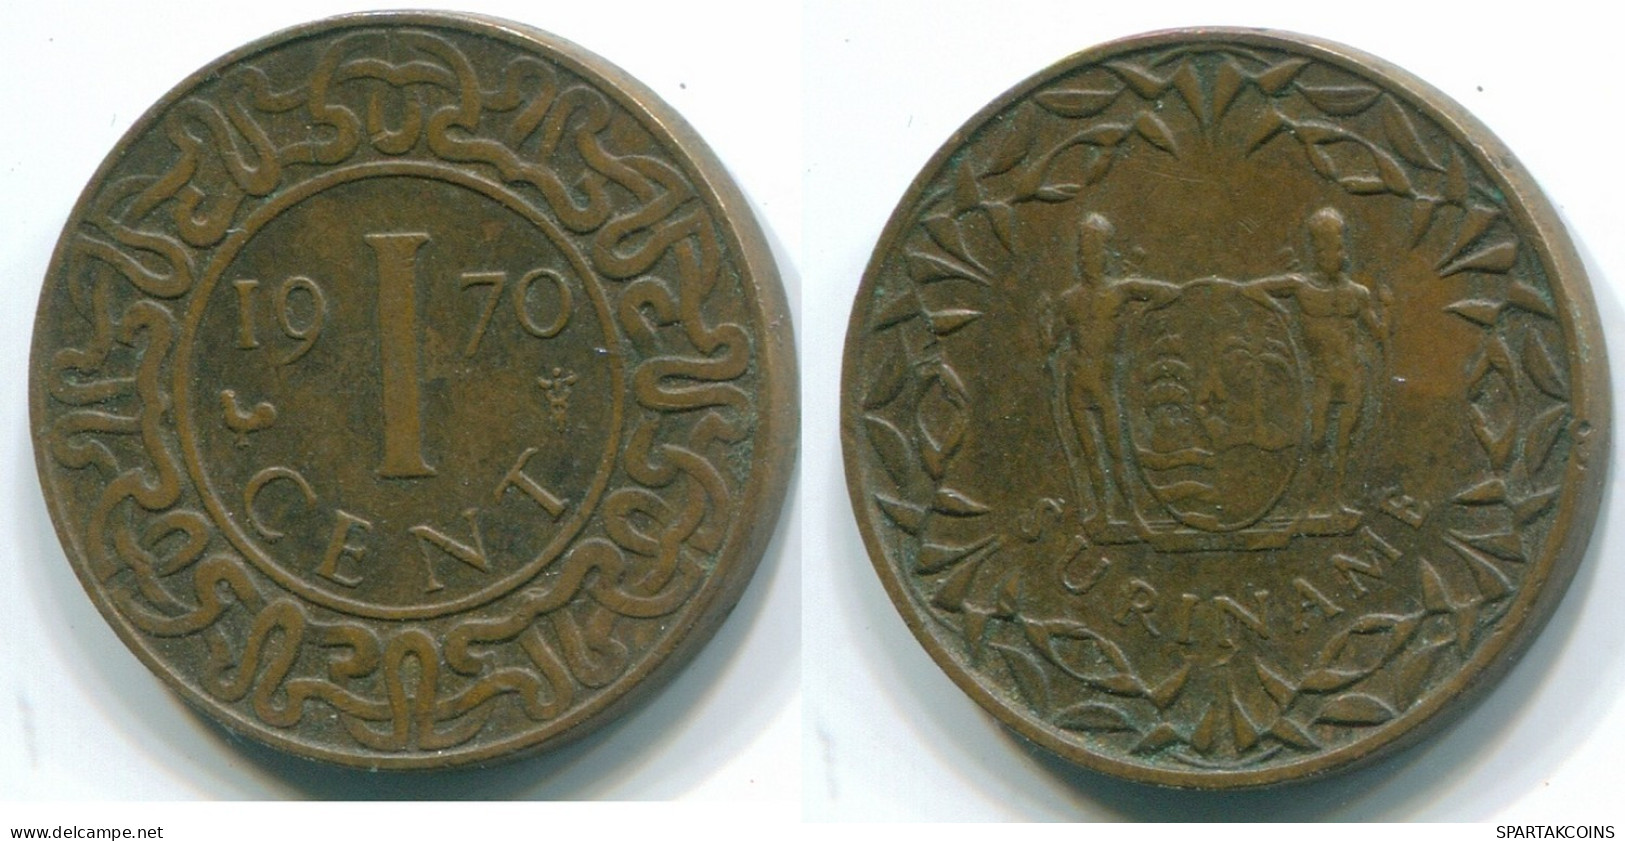 1 CENT 1970 SURINAME Netherlands Bronze Cock Colonial Coin #S10958.U.A - Surinam 1975 - ...